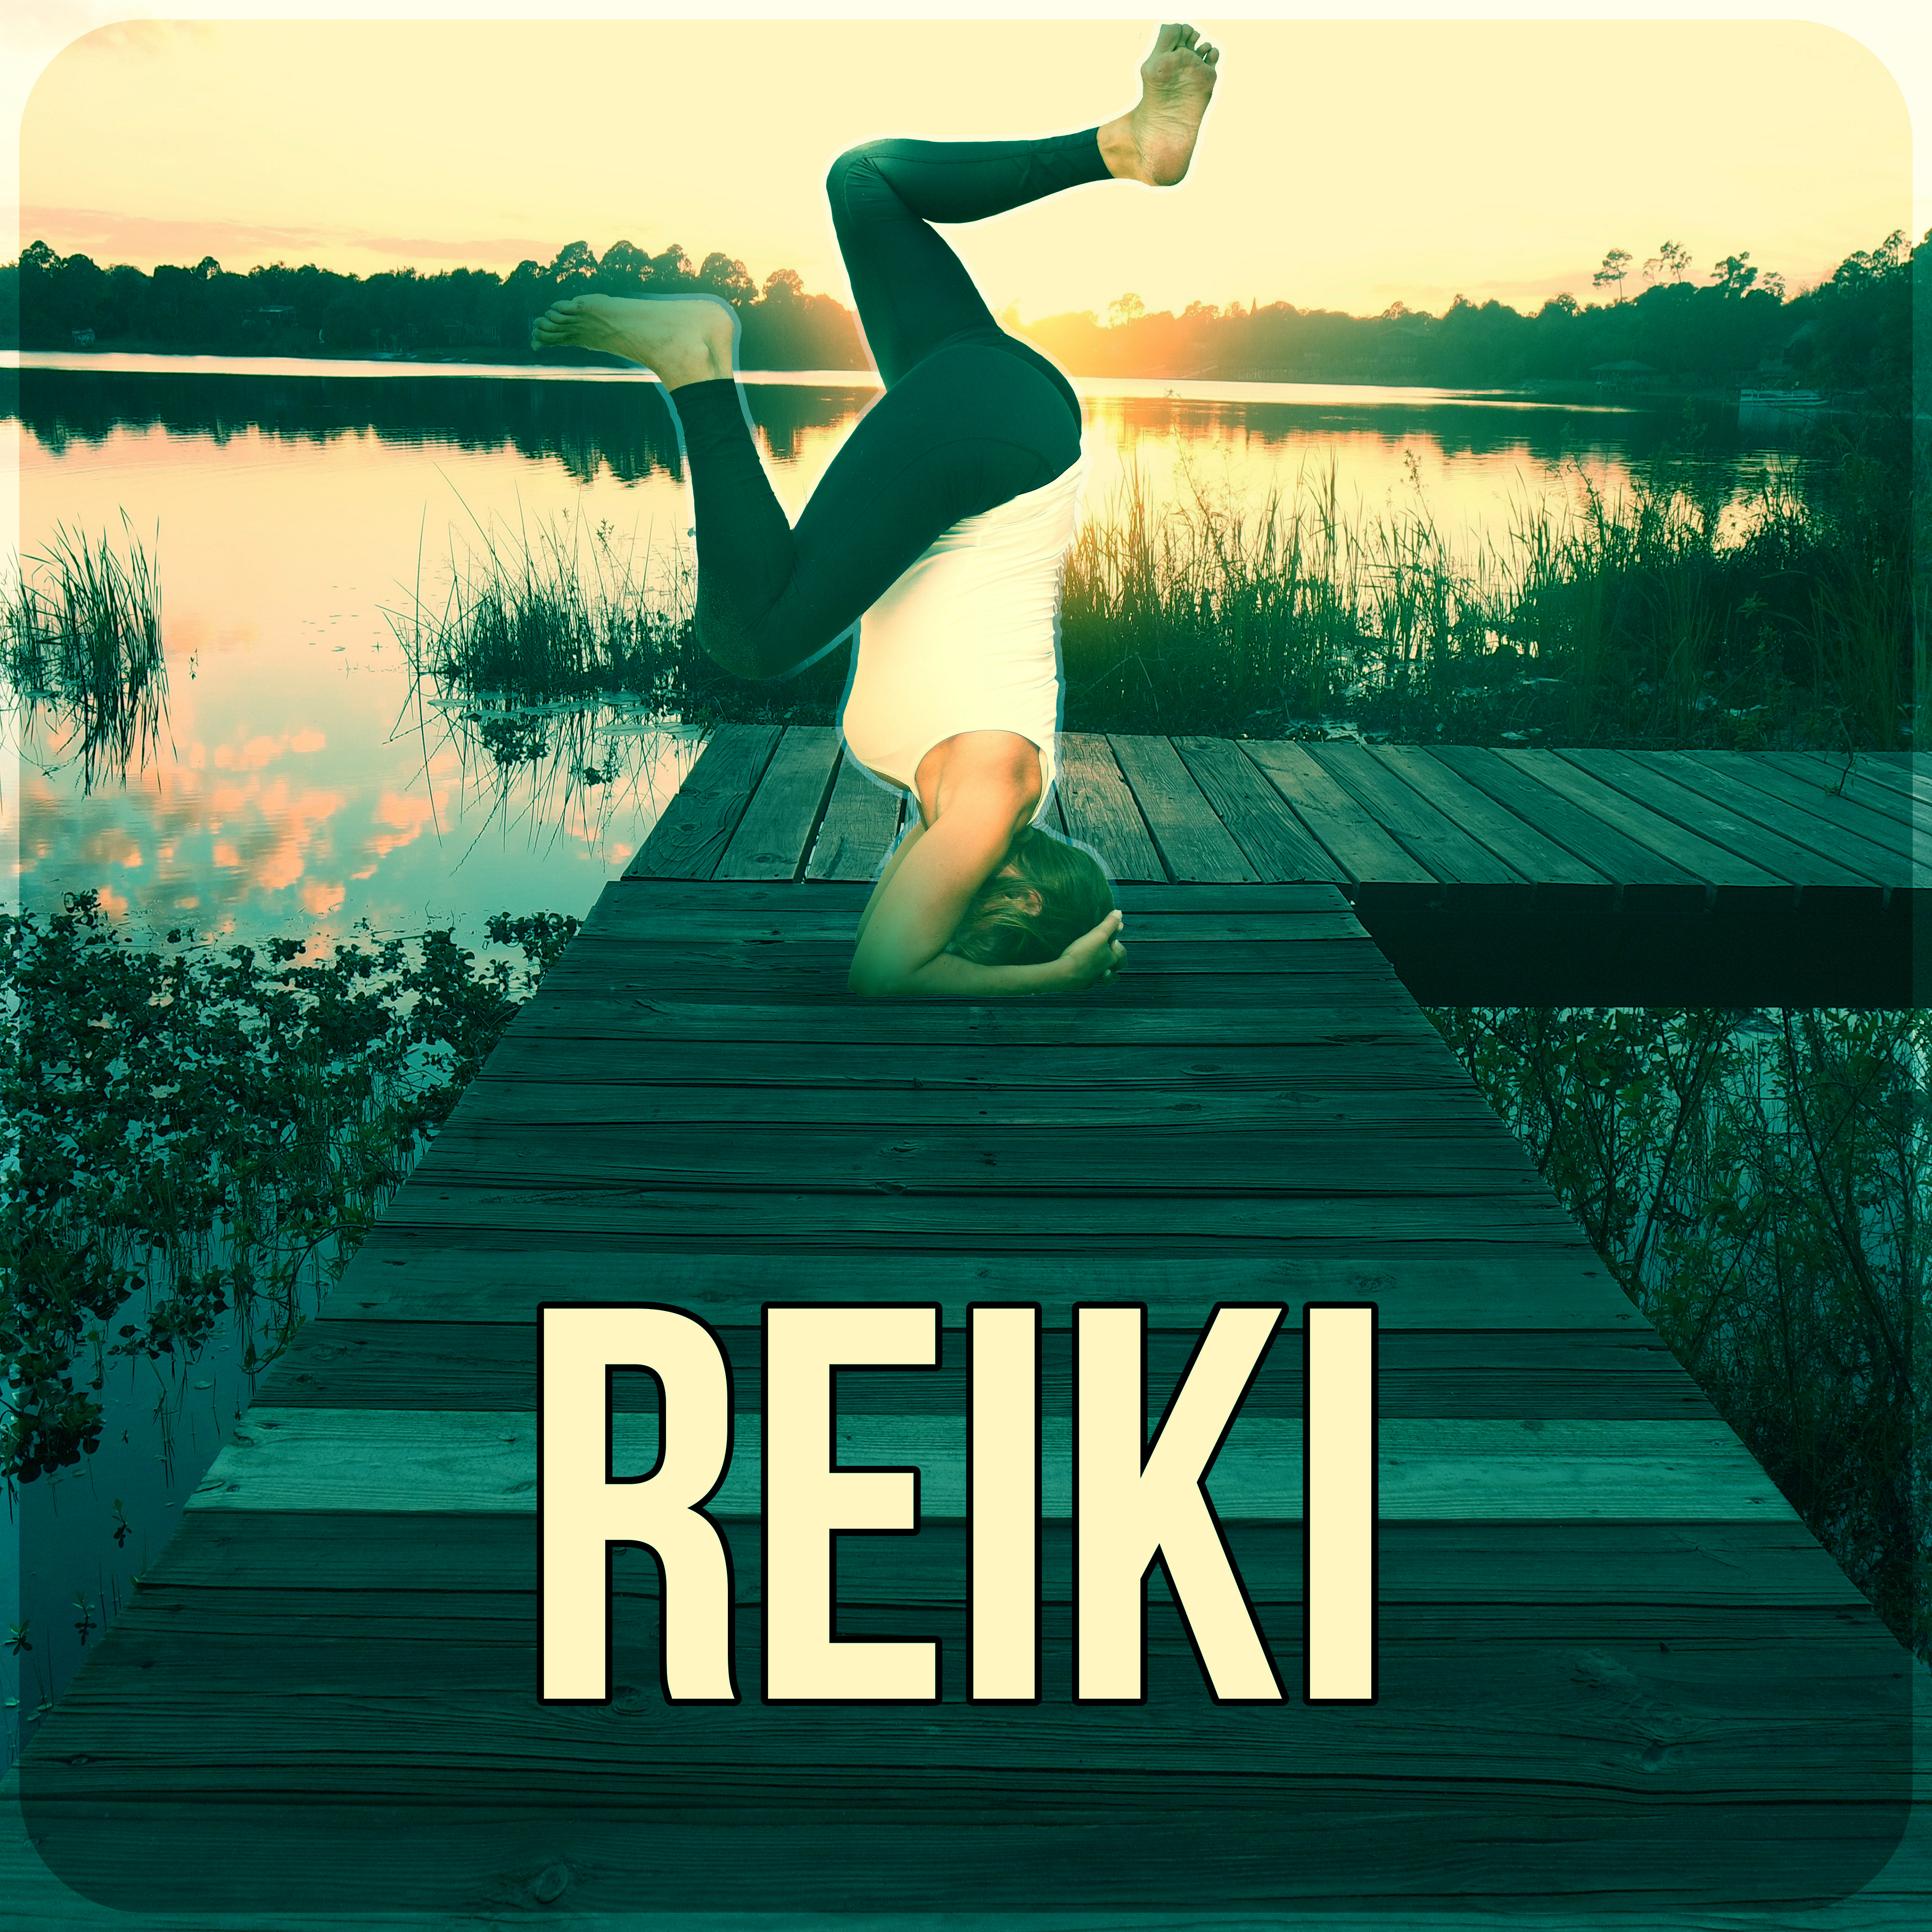 Reiki  Basic Transcendental Meditation for Beginners with Nature Sounds, Ocean Sounds for Yoga Class  Mindfulness Meditation, Zen, Reiki, Sleep